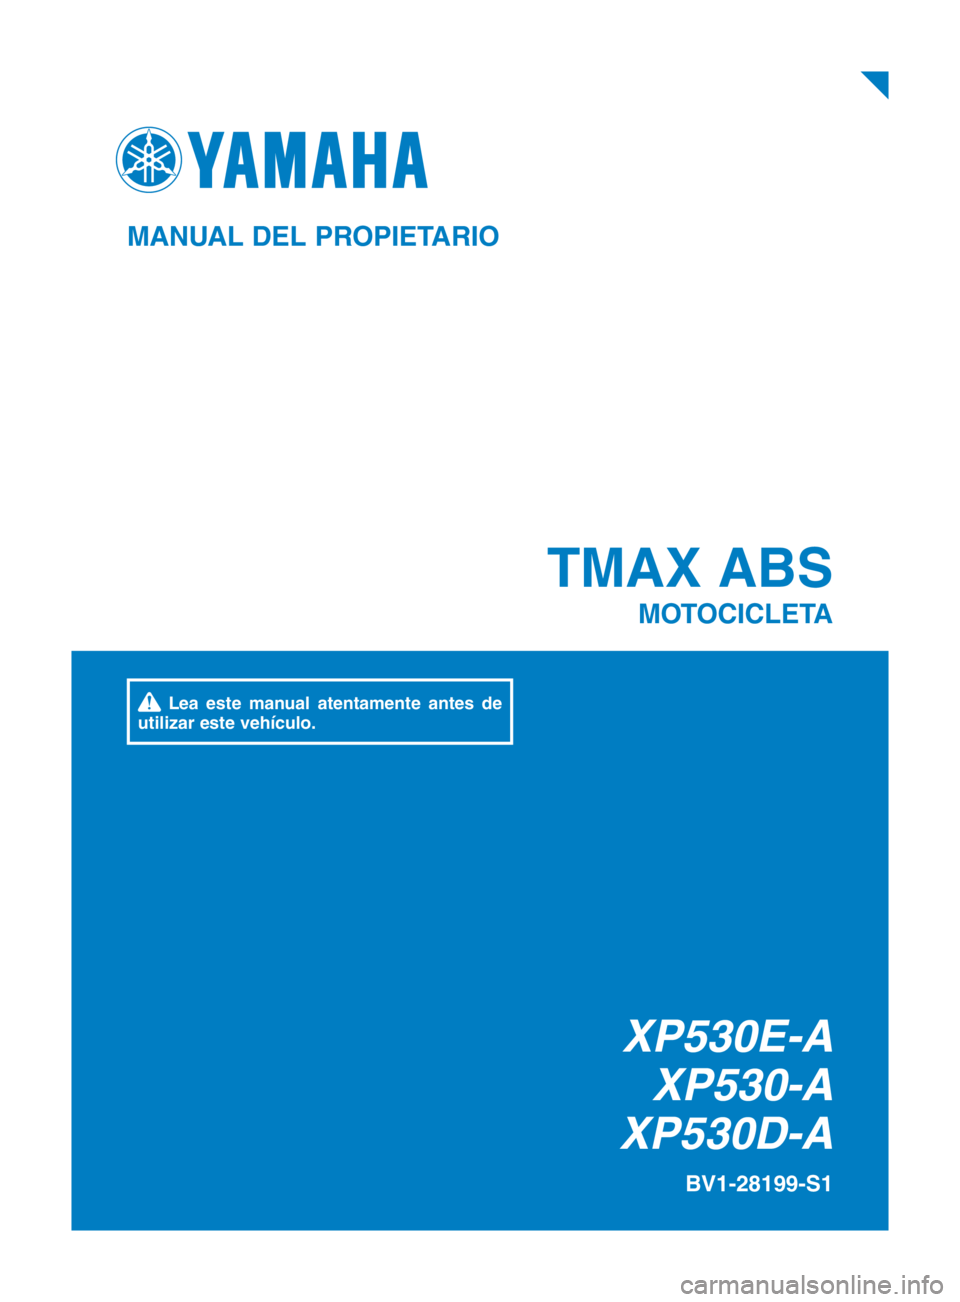 YAMAHA TMAX 2018  Manuale de Empleo (in Spanish) XP530E-AXP530-A
XP530D-A
TMAX ABS
MOTOCICLETA
BV1-28199-S1
MANUAL DEL PROPIETARIO
 Lea este manual atentamente antes de 
utilizar este vehículo.
BV1-9-S1_cover_vertical.indd   12018/07/13   15:00:37 